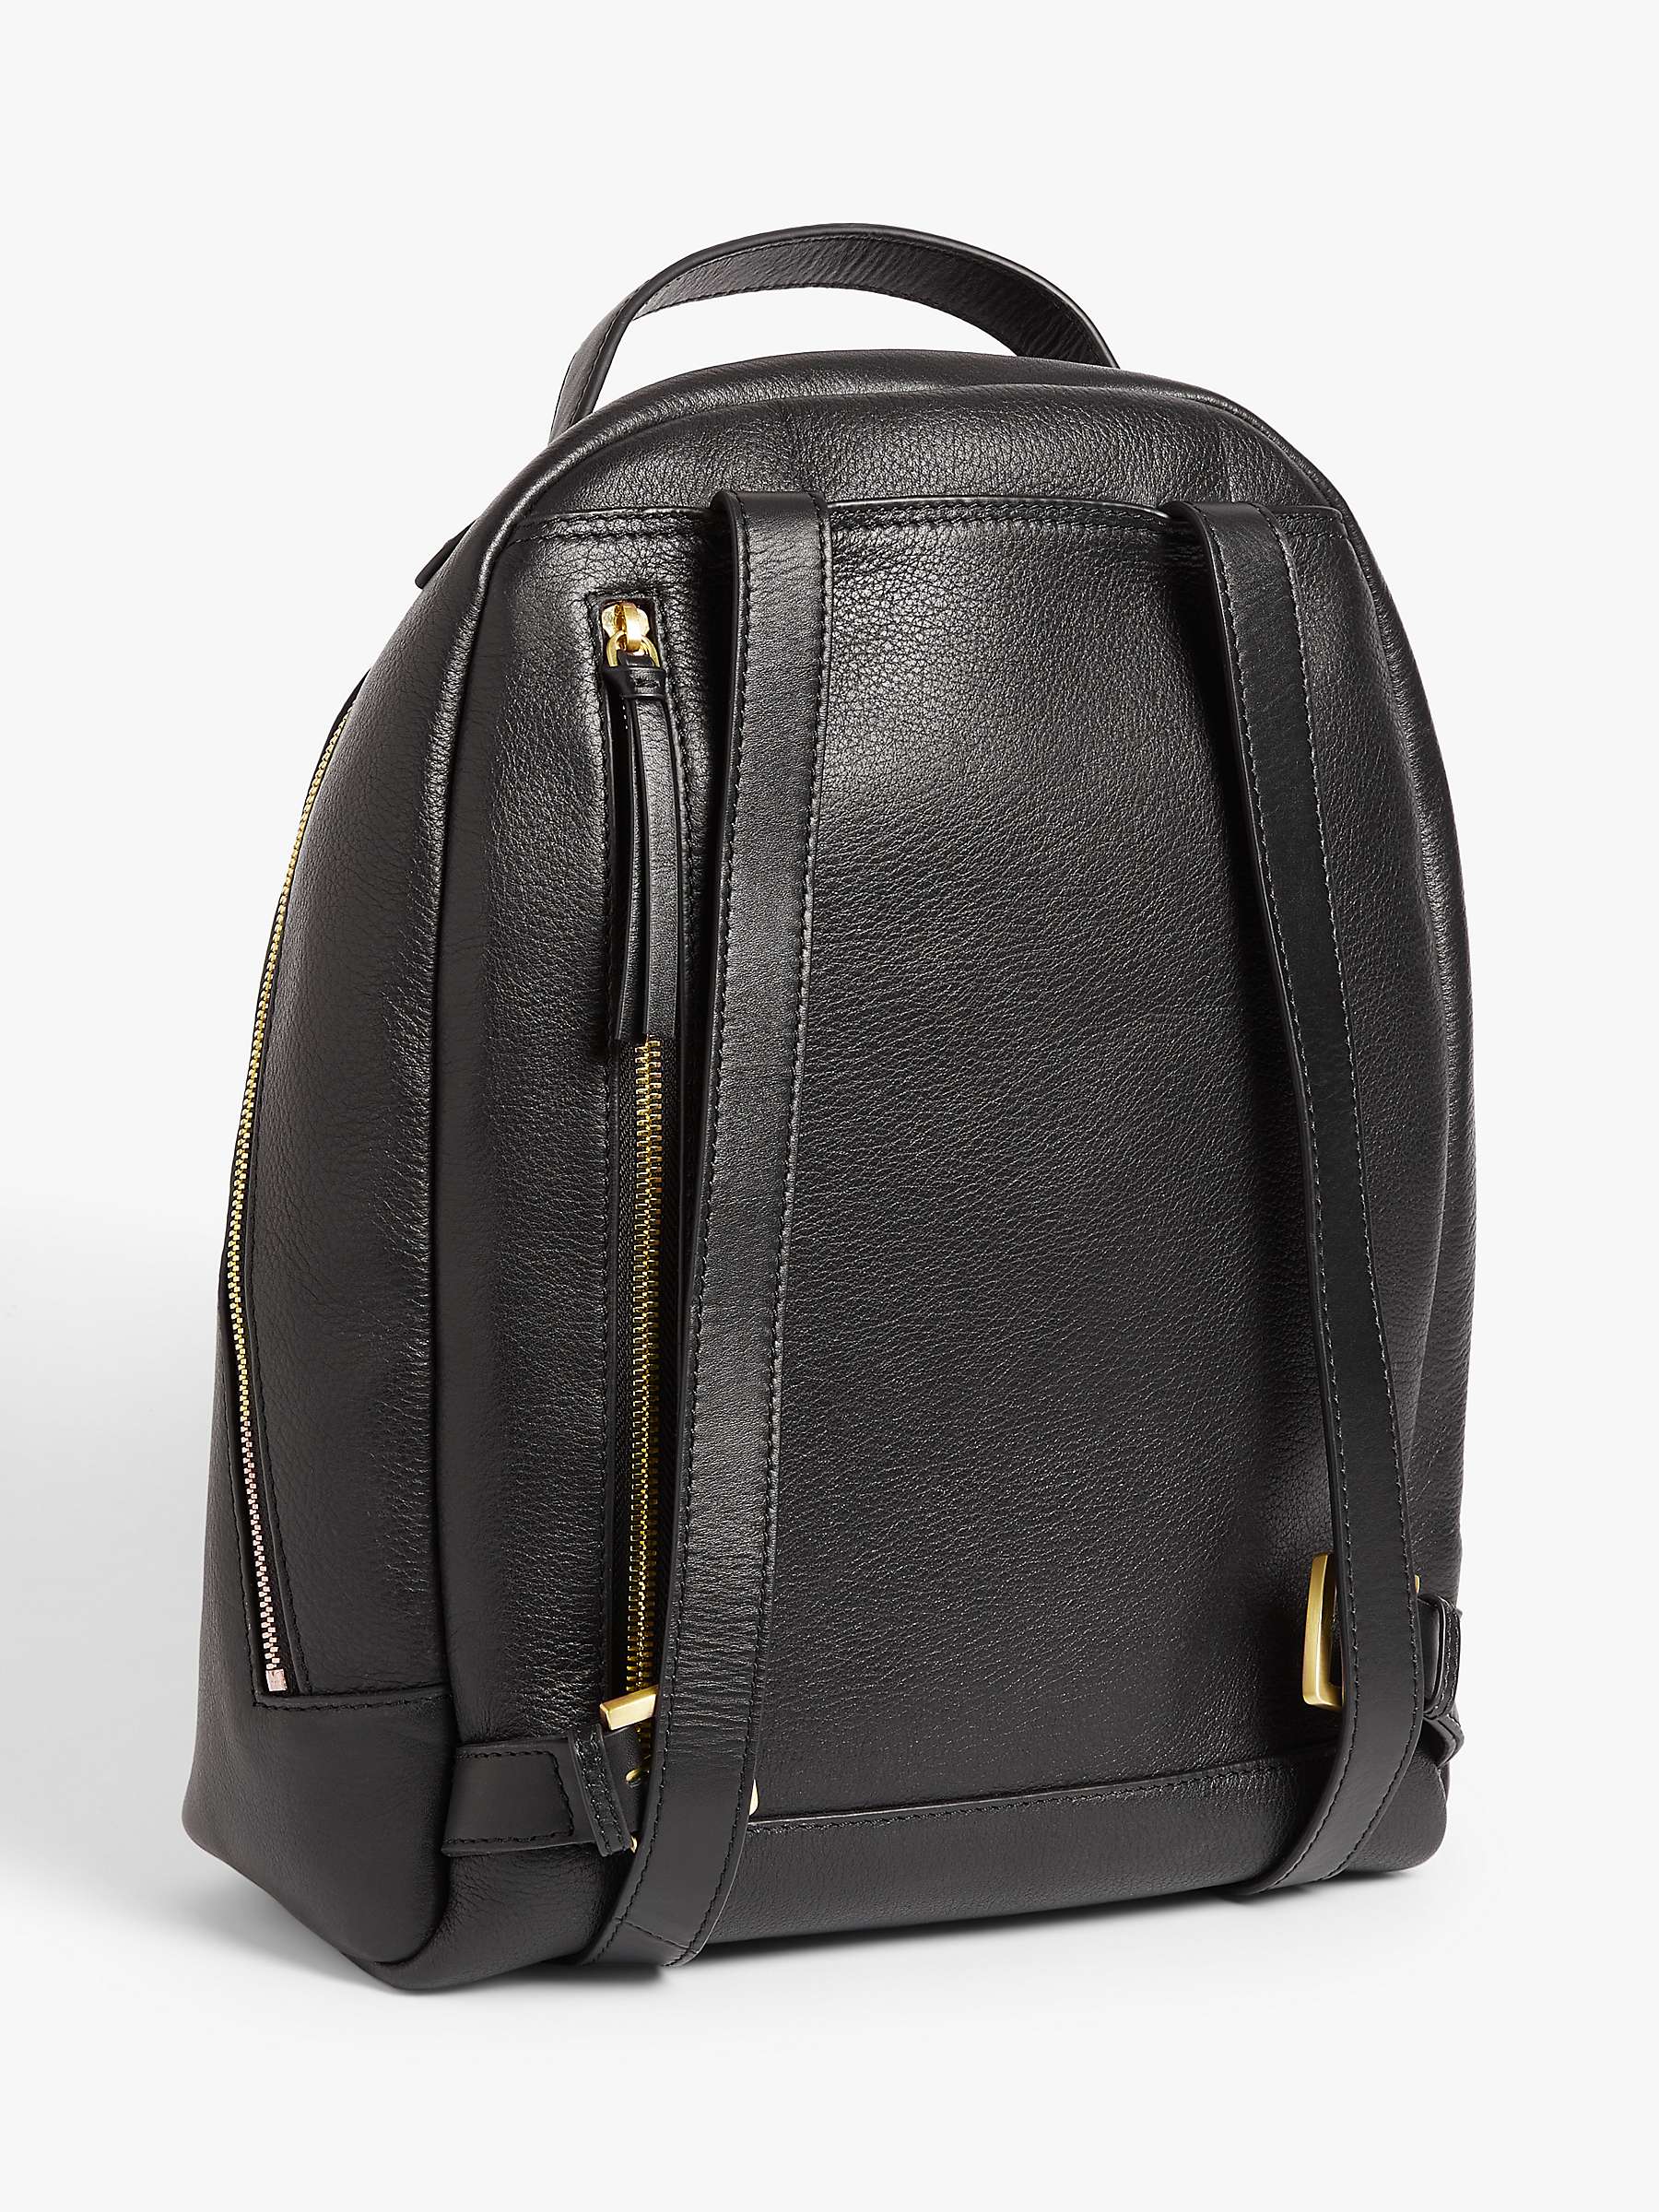 John Lewis & Partners Harper Leather Backpack, Black at John Lewis ...